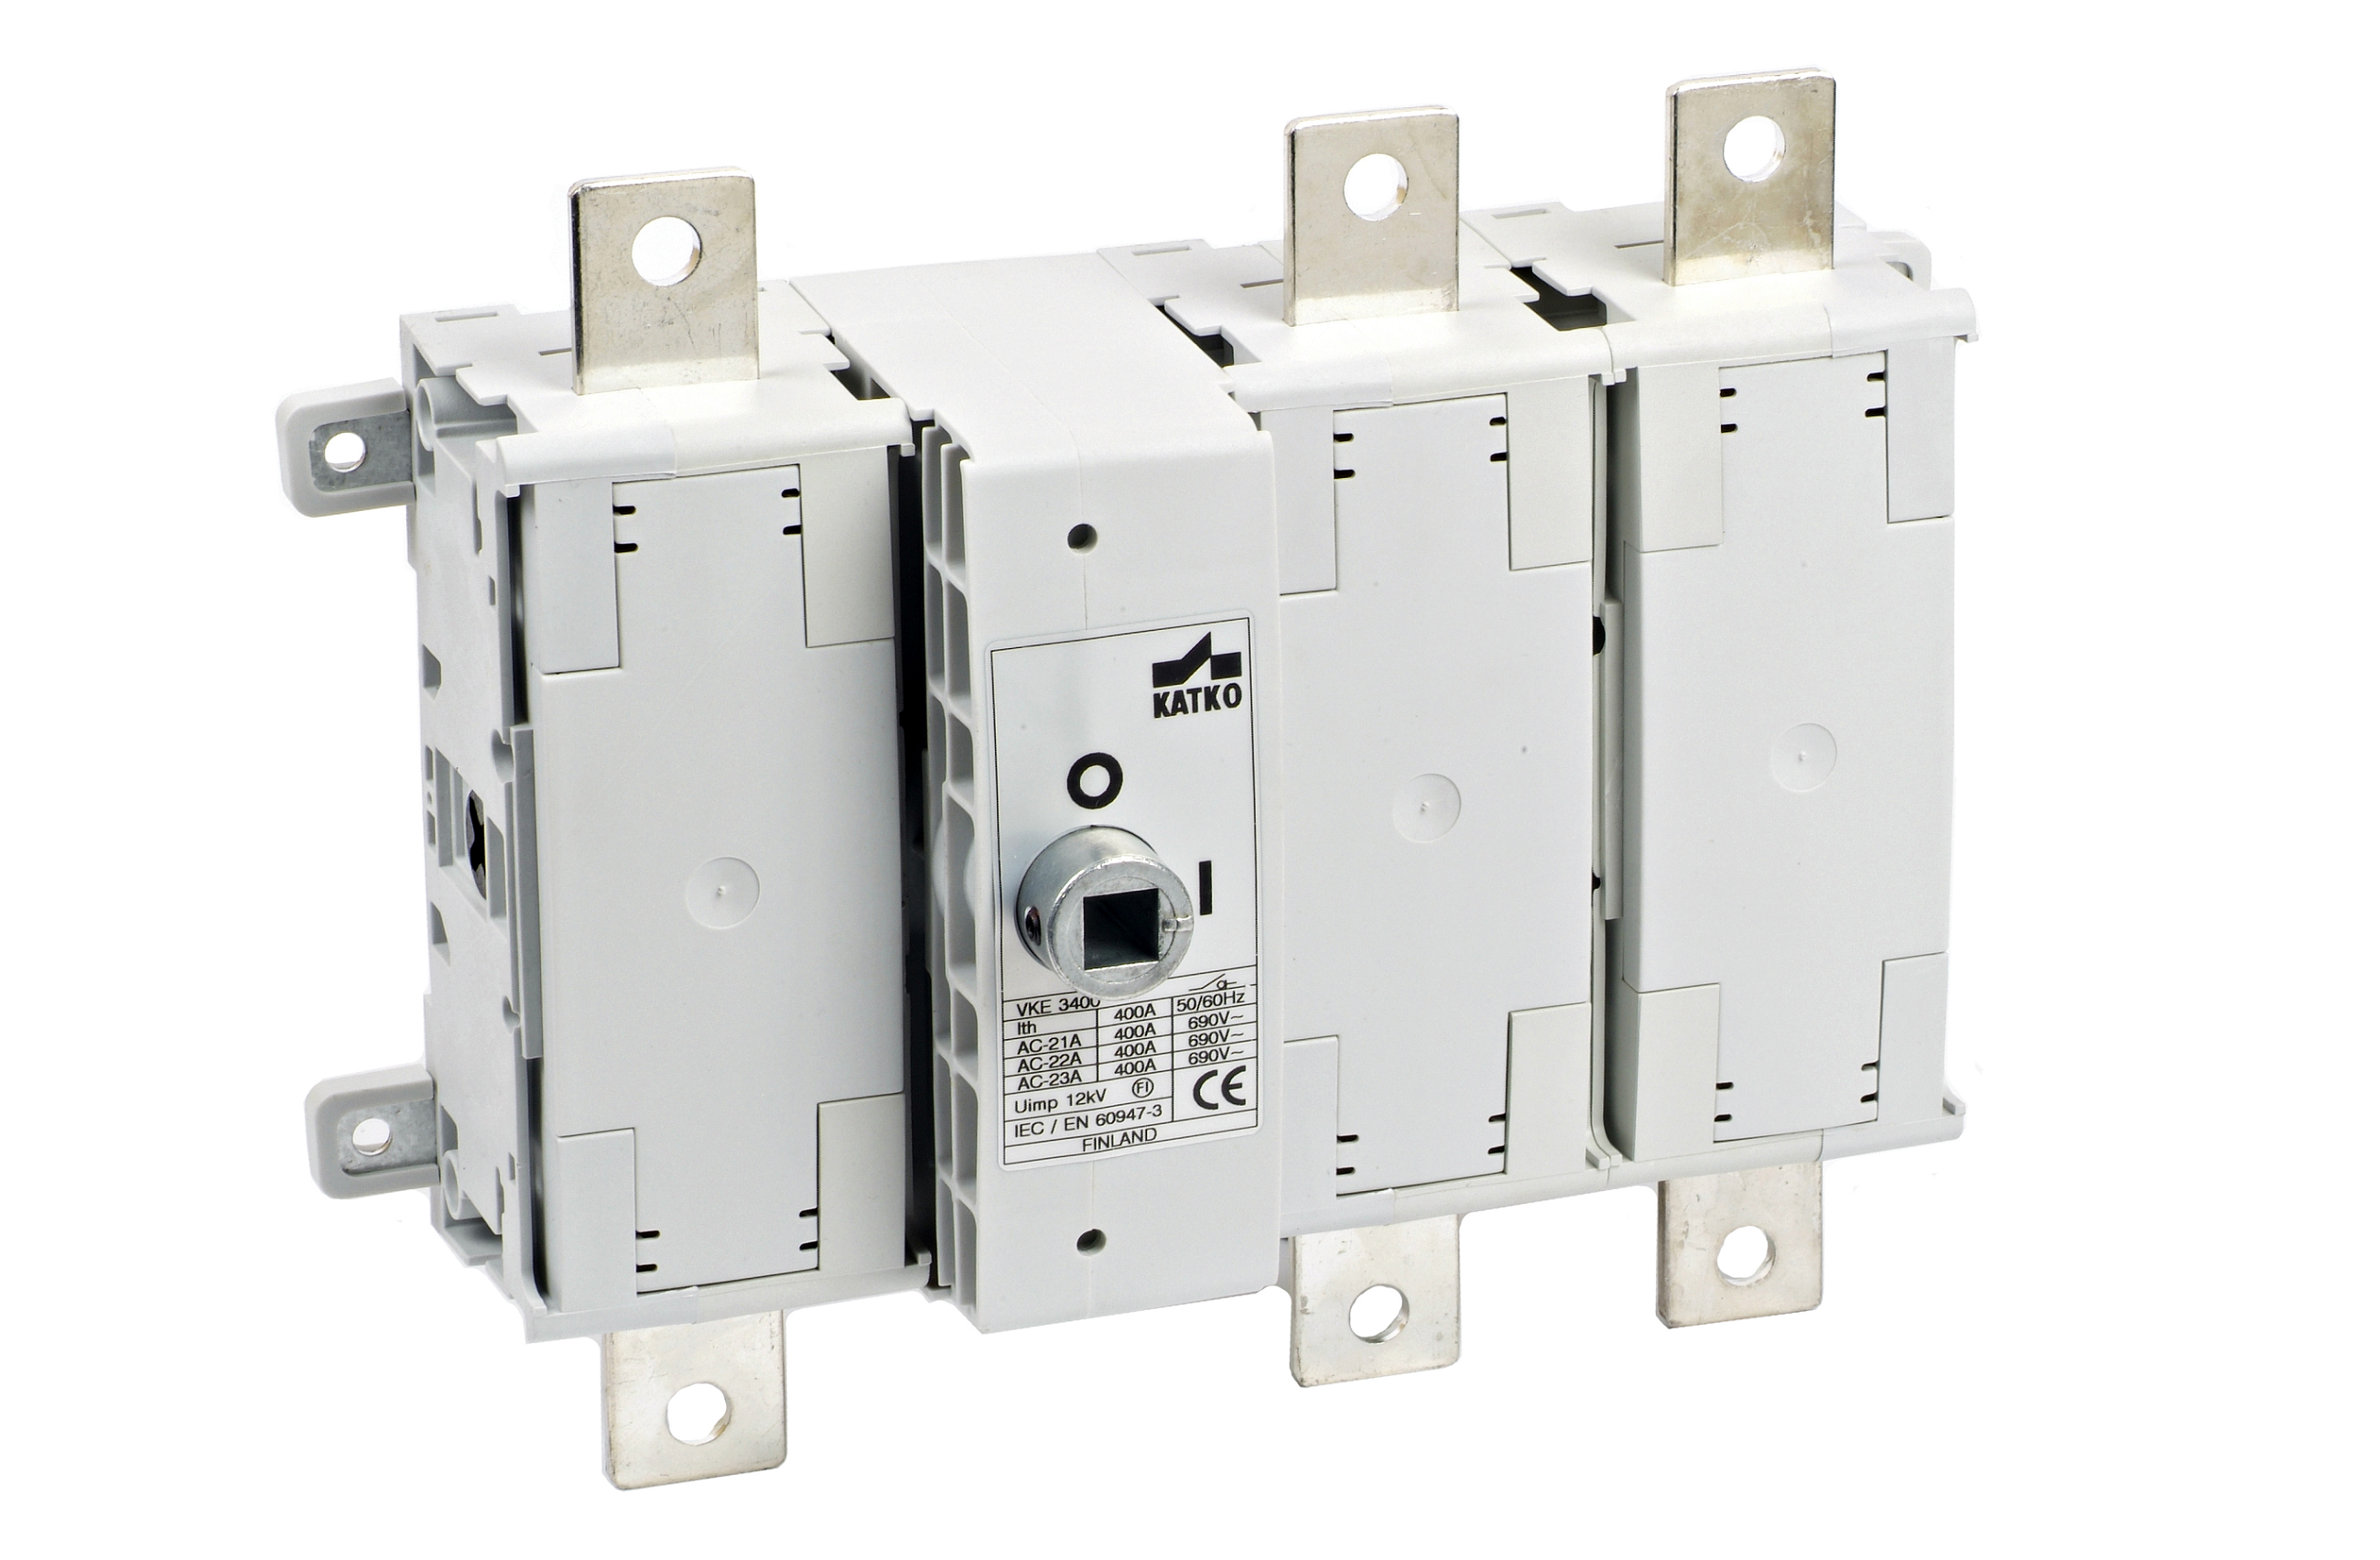 Load Break Switches 125-630A VKE Modular Series